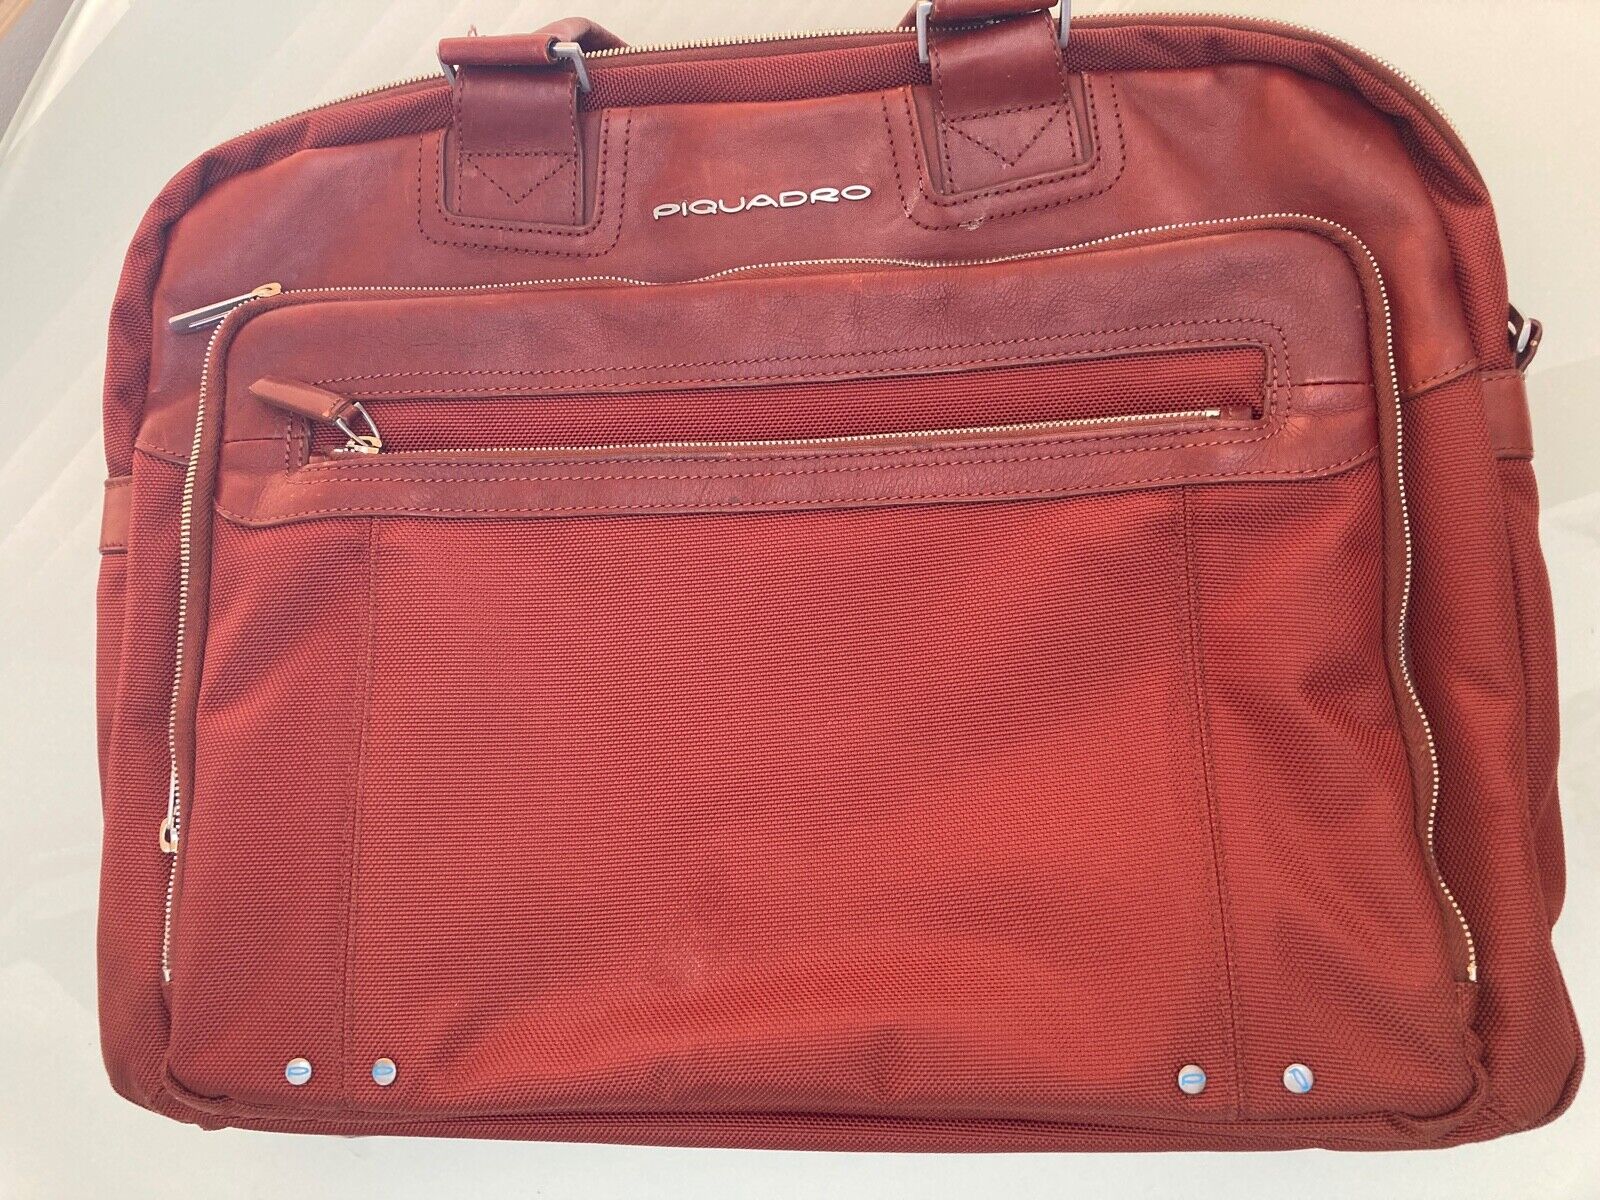 Piquadro Red Briefcase or laptop Bag Nice